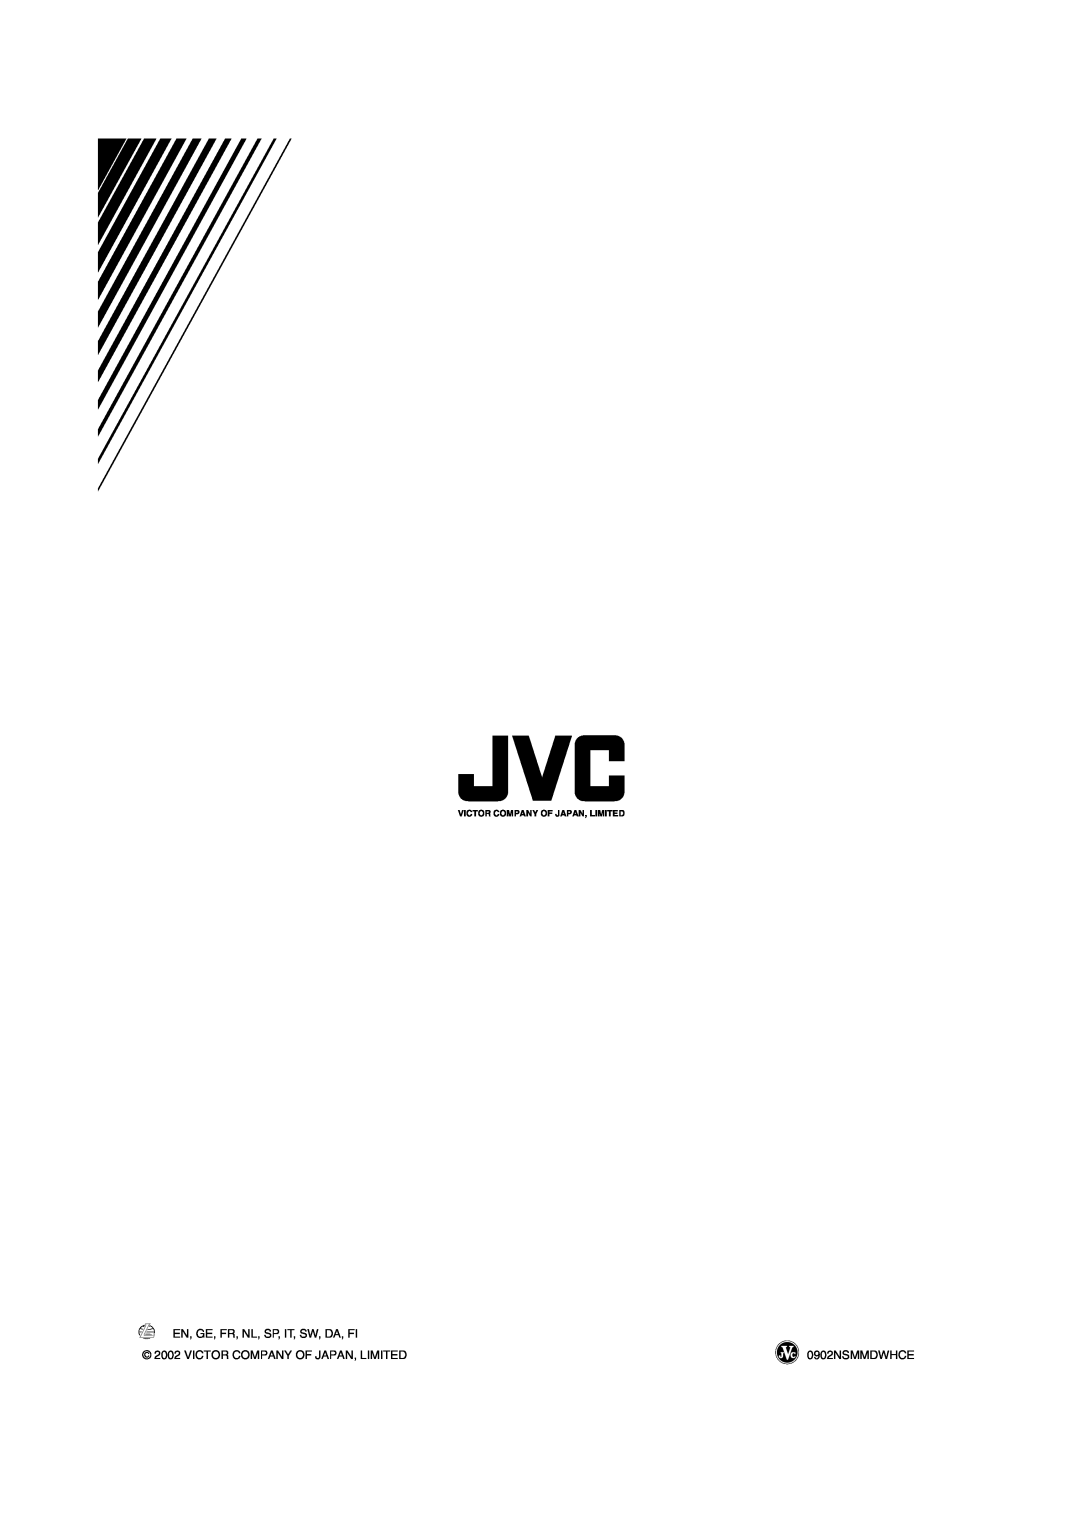 JVC LVT0953-001B manual En, Ge, Fr, Nl, Sp, It, Sw, Da, Fi, Victor Company Of Japan, Limited, 0902NSMMDWHCE 